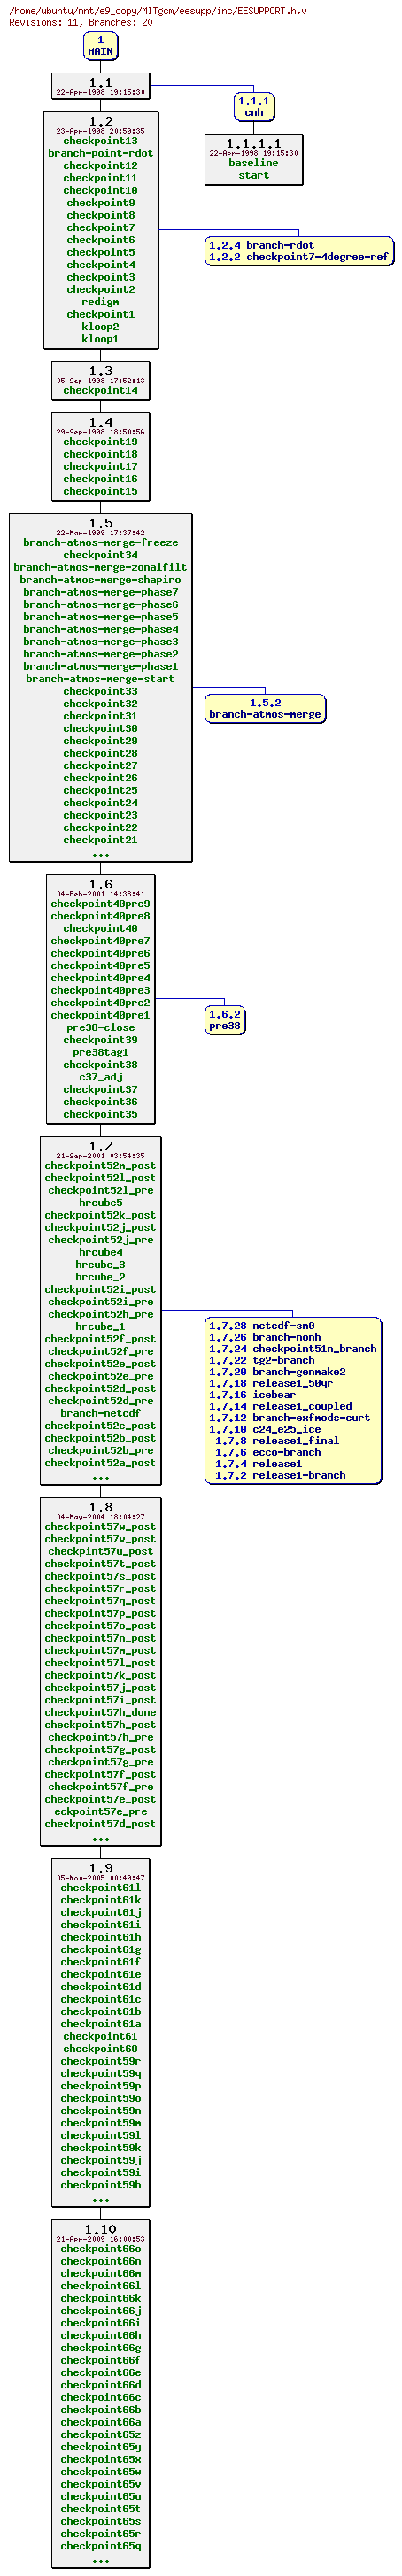 Revisions of MITgcm/eesupp/inc/EESUPPORT.h